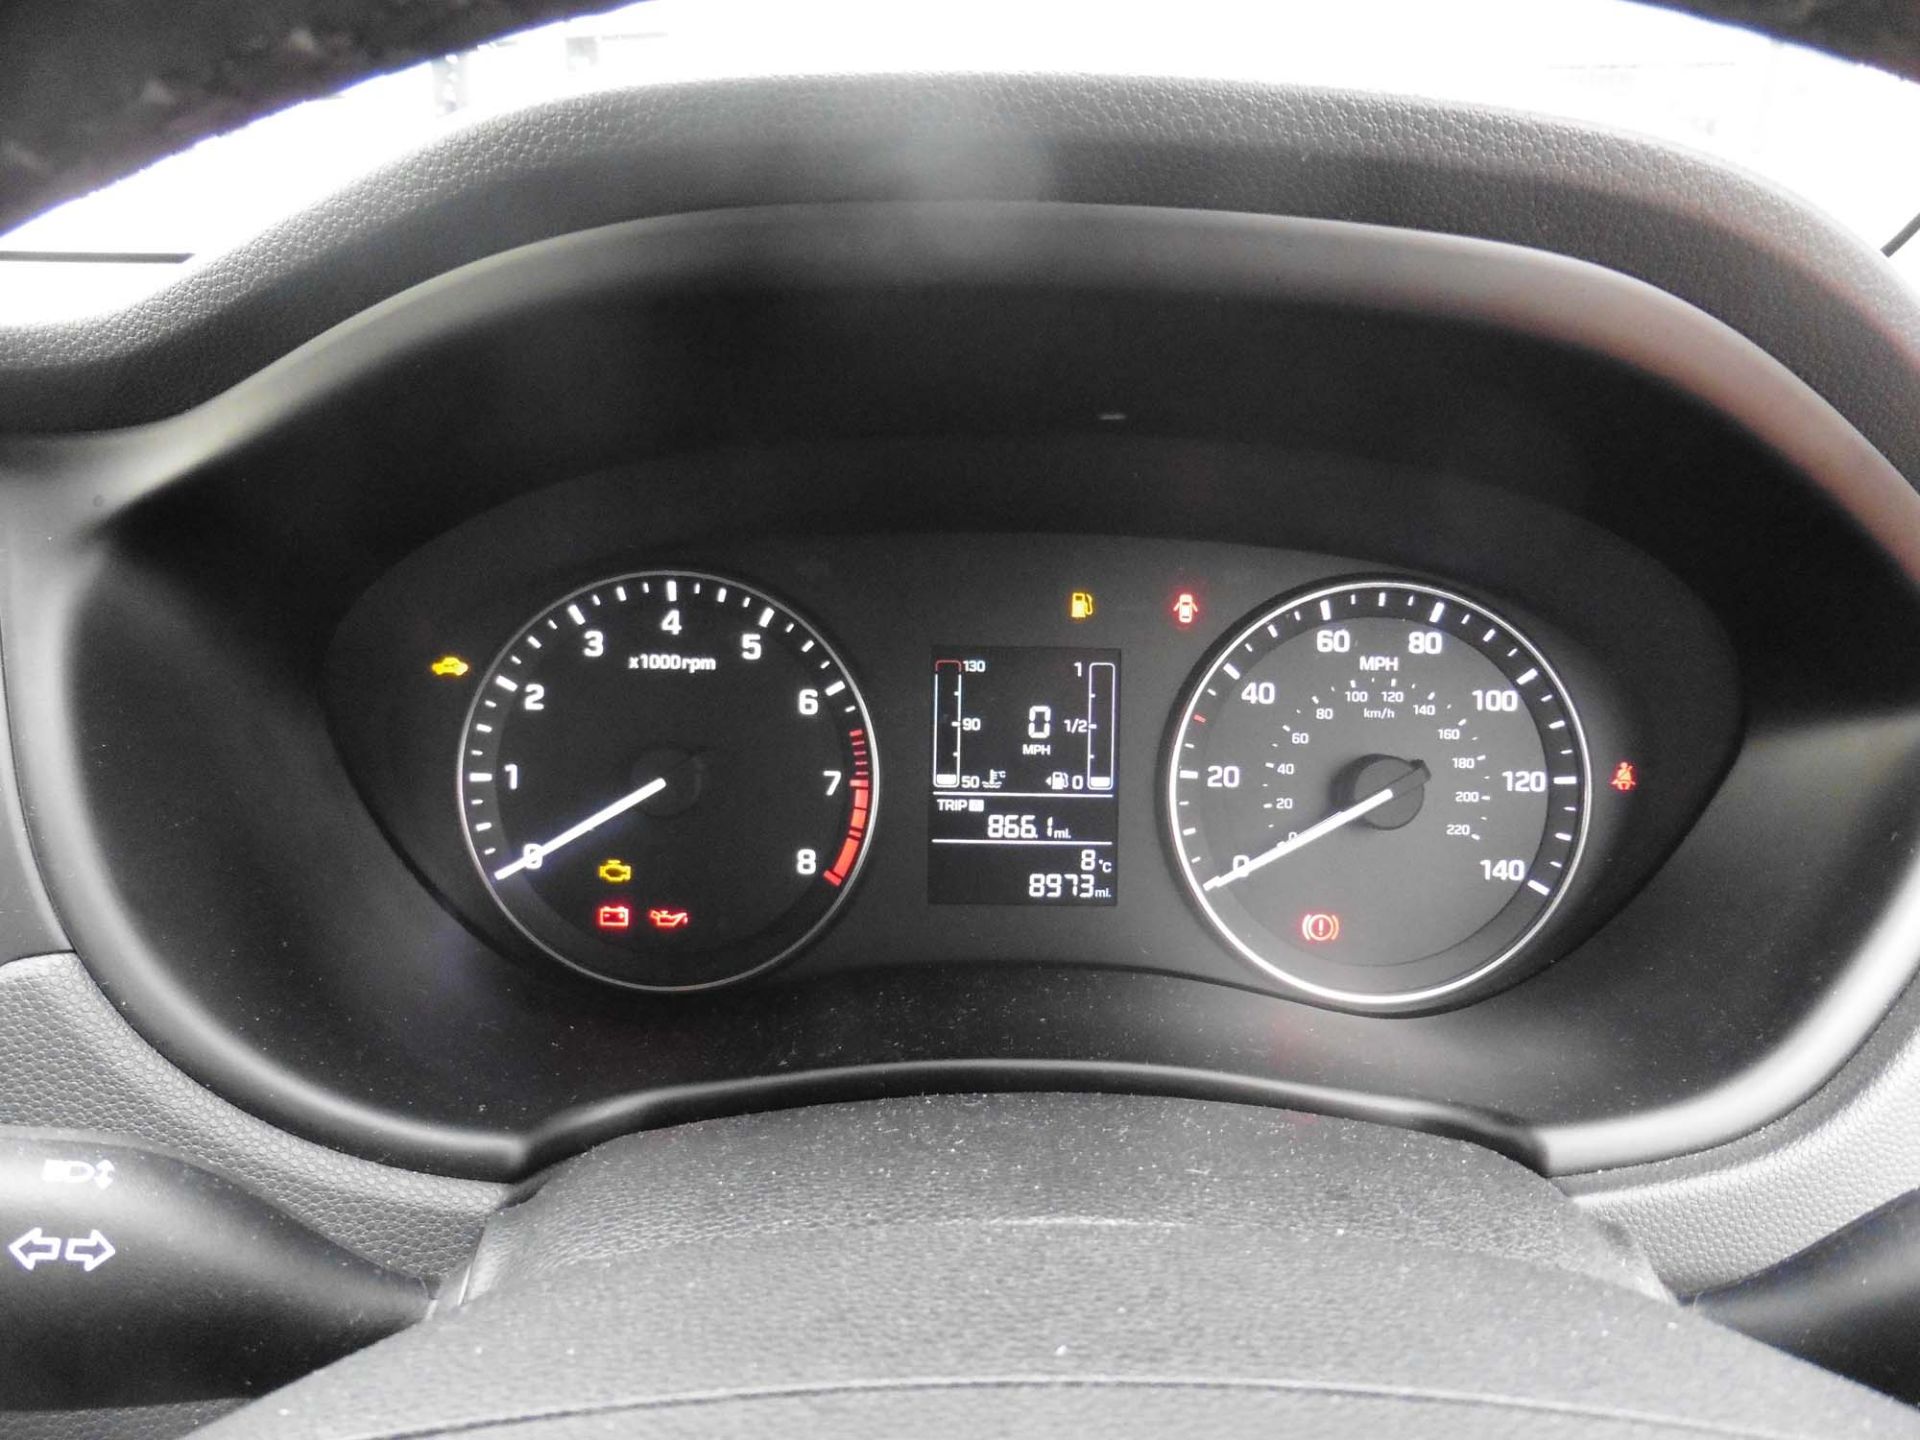 Hyundai i20 SE MPI 1248cc, petrol coupe Registration number: LO66 GHV First Registered: 31.01.2017 - Image 9 of 9